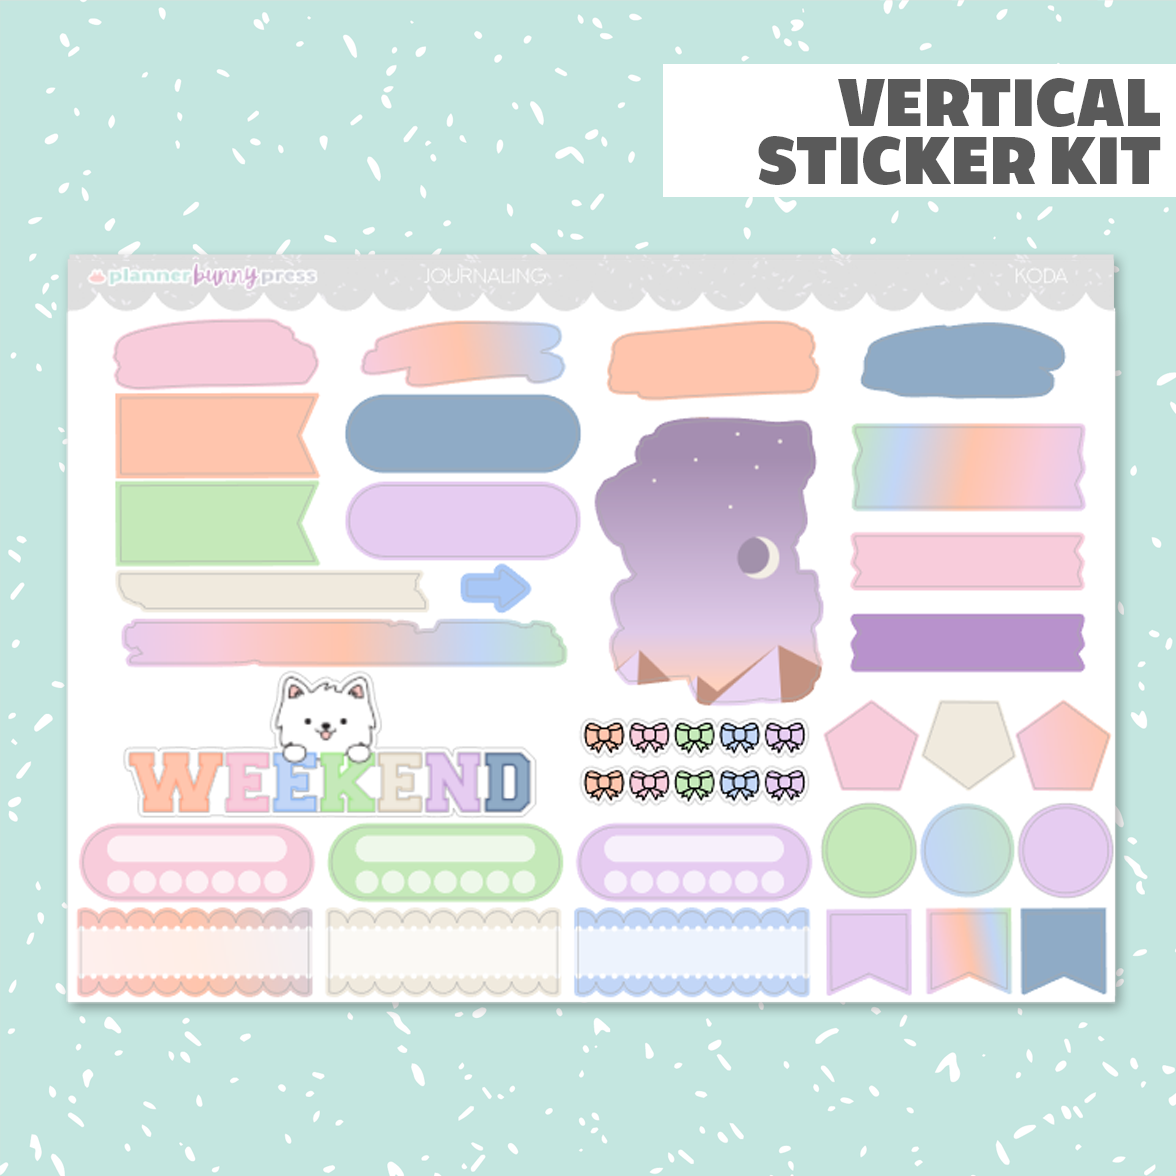 Koda | Vertical Sticker Kit